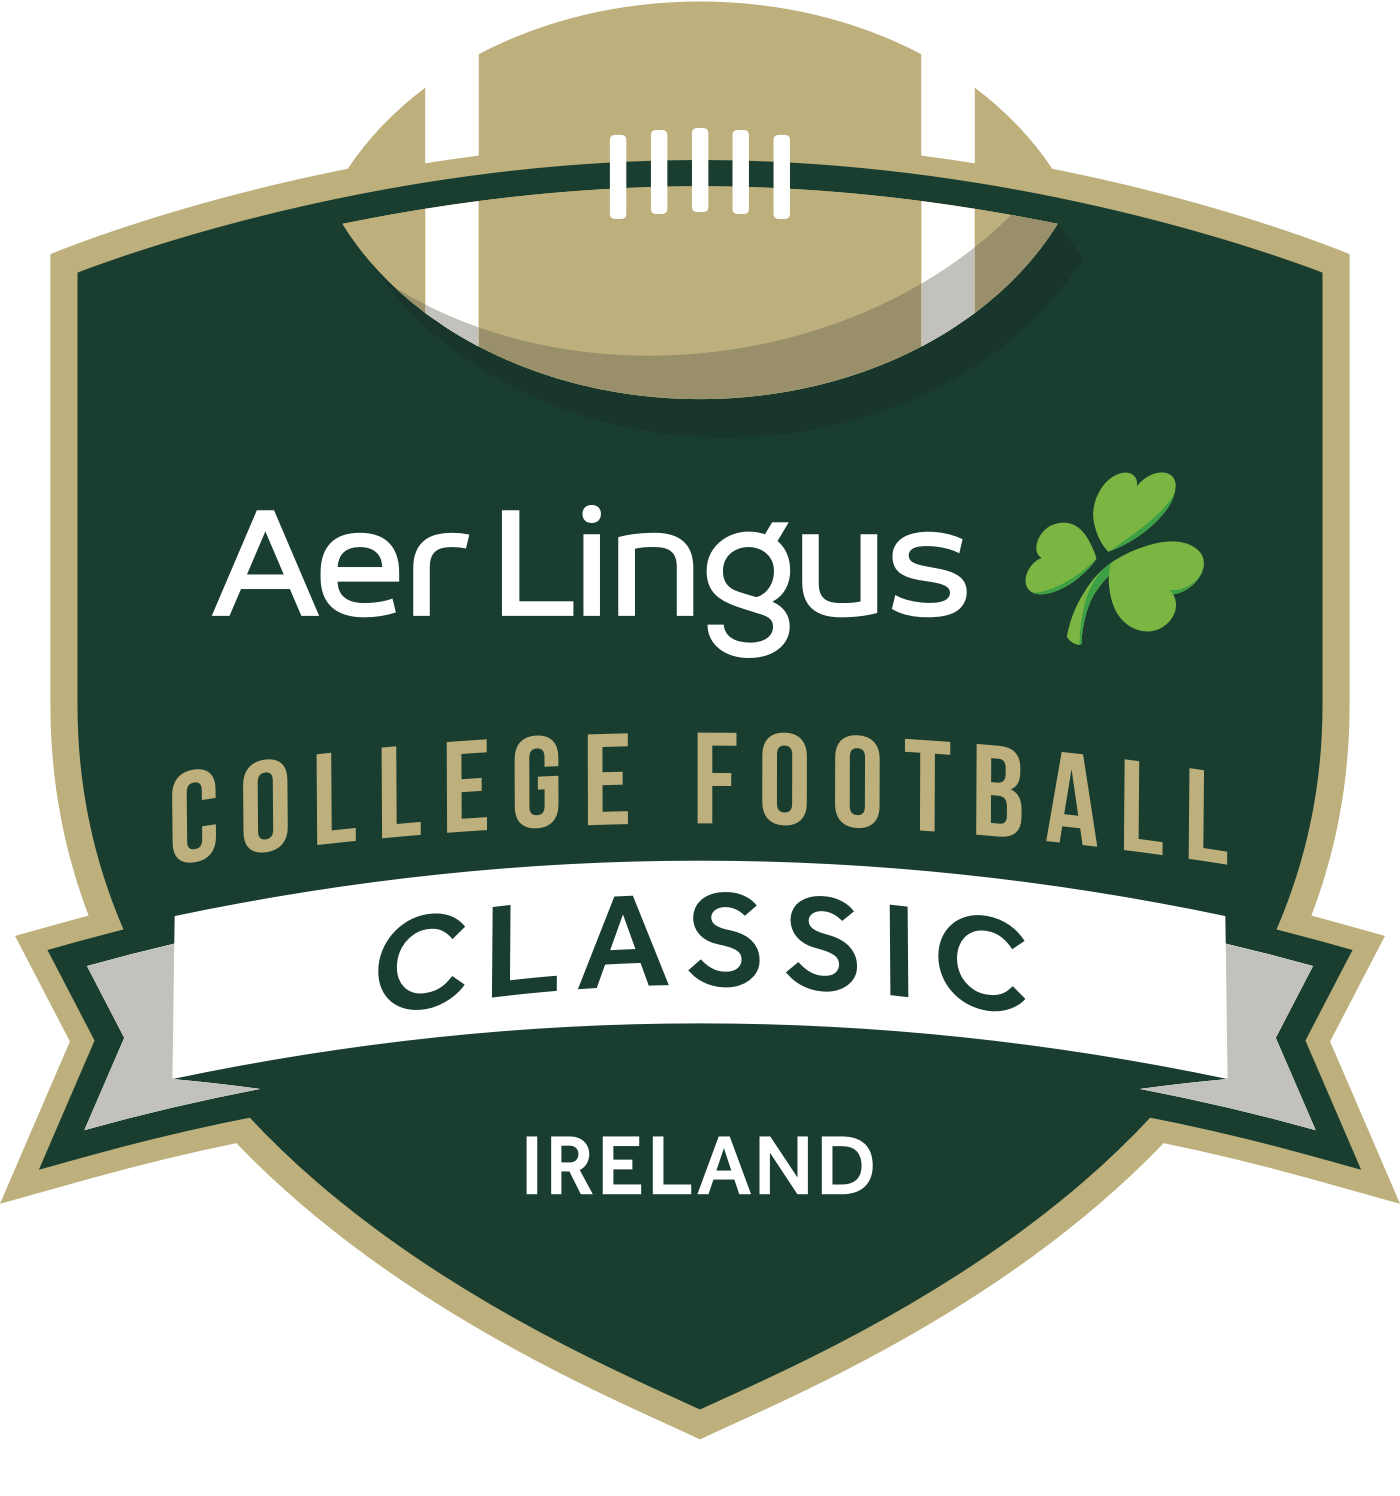 Aer Lingus College Football Classic logo